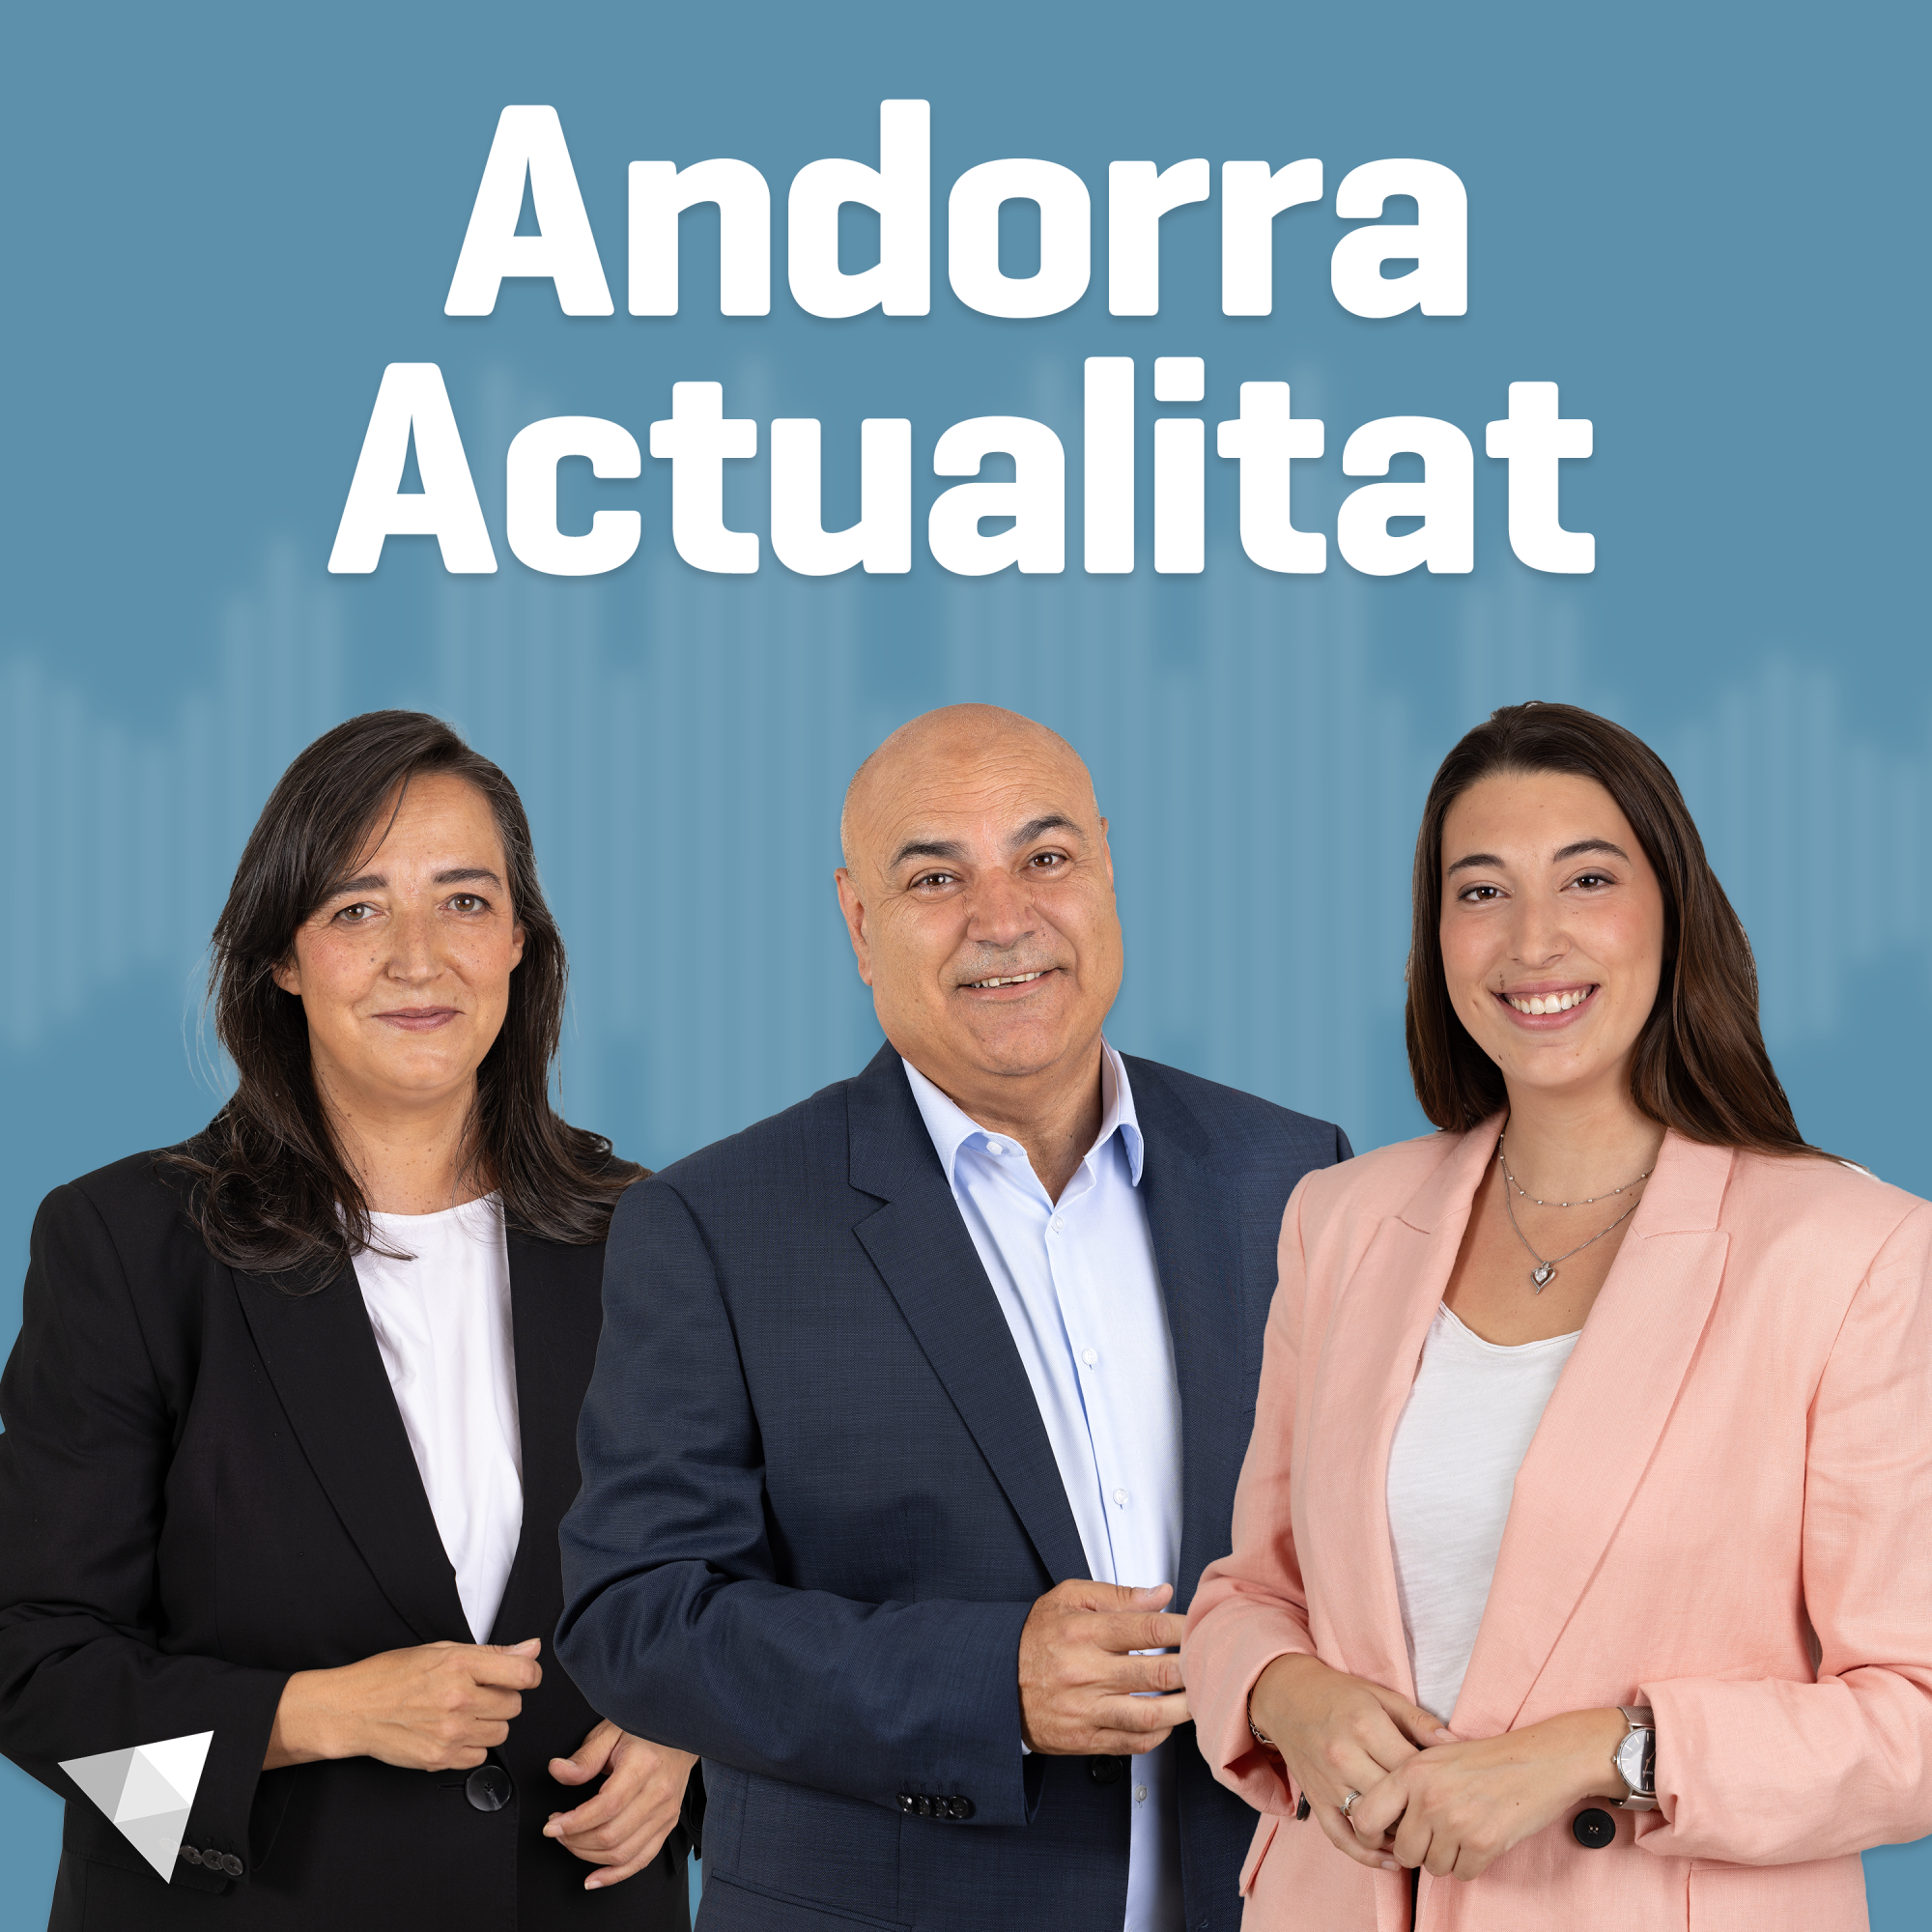 Andorra actualitat